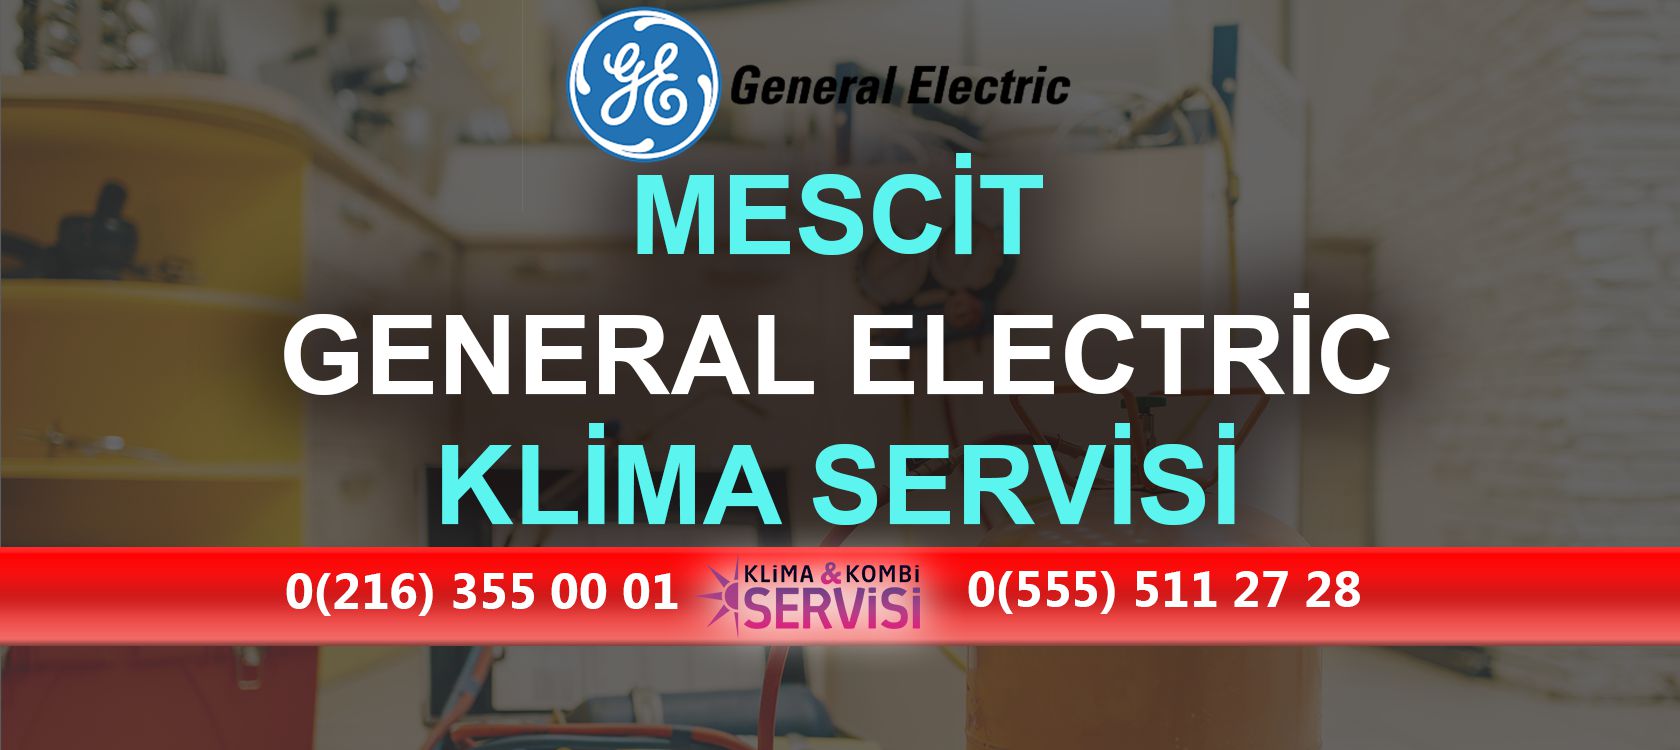 Mescit General Electric Klima Servisi